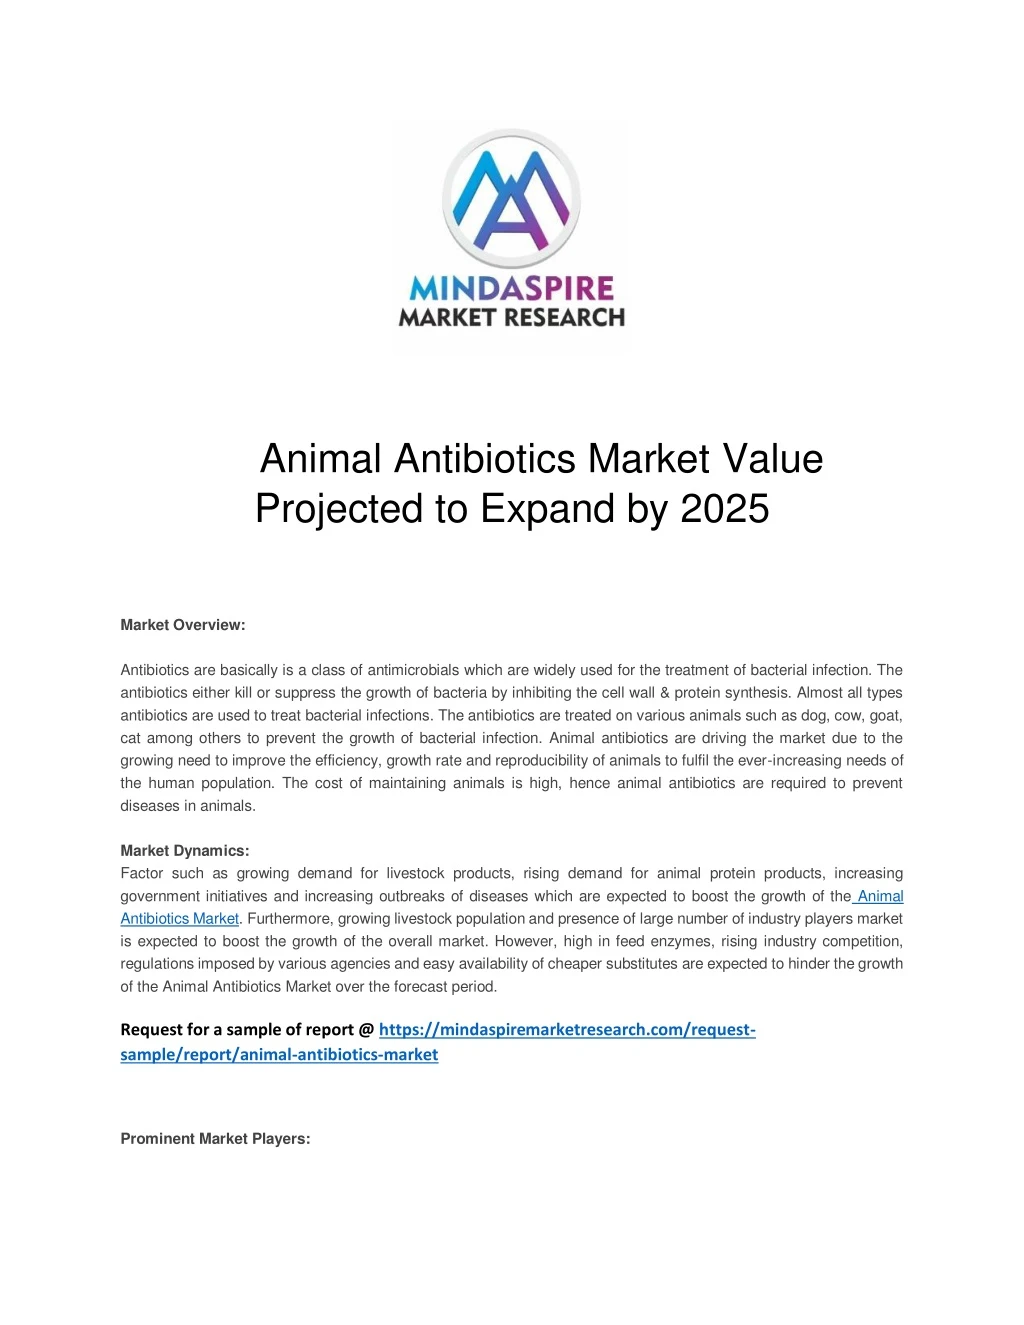 animal antibiotics market value projected